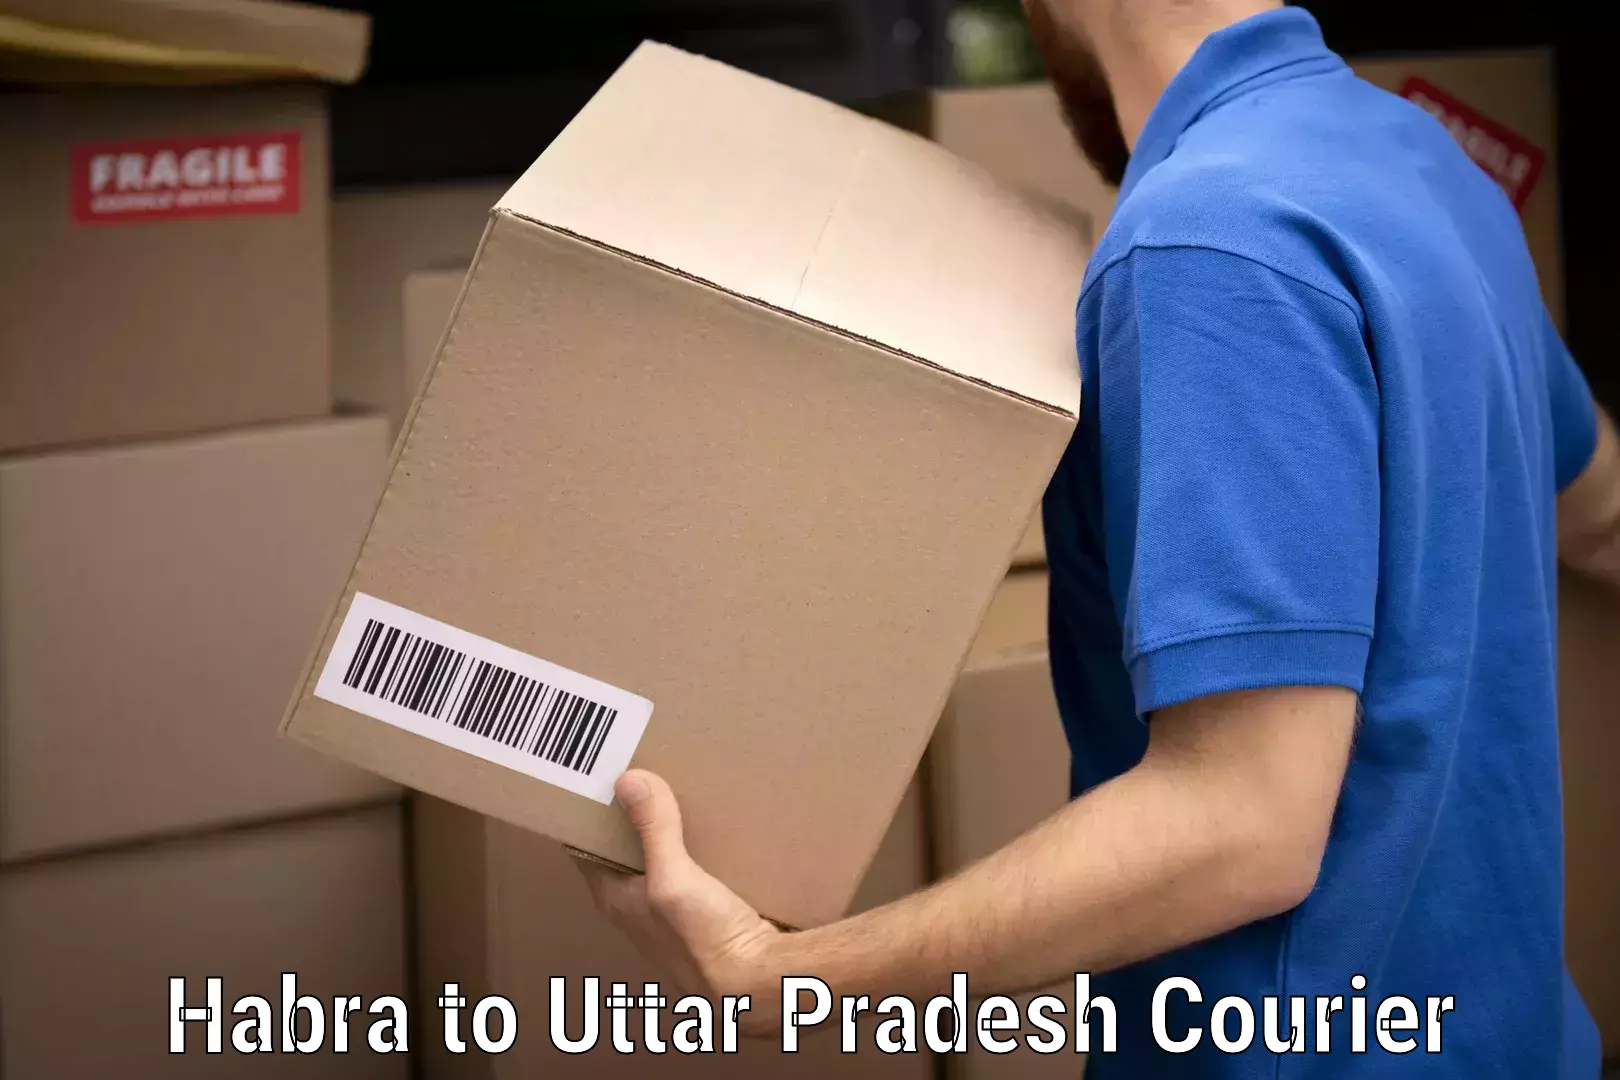 Specialized moving company Habra to Uttar Pradesh